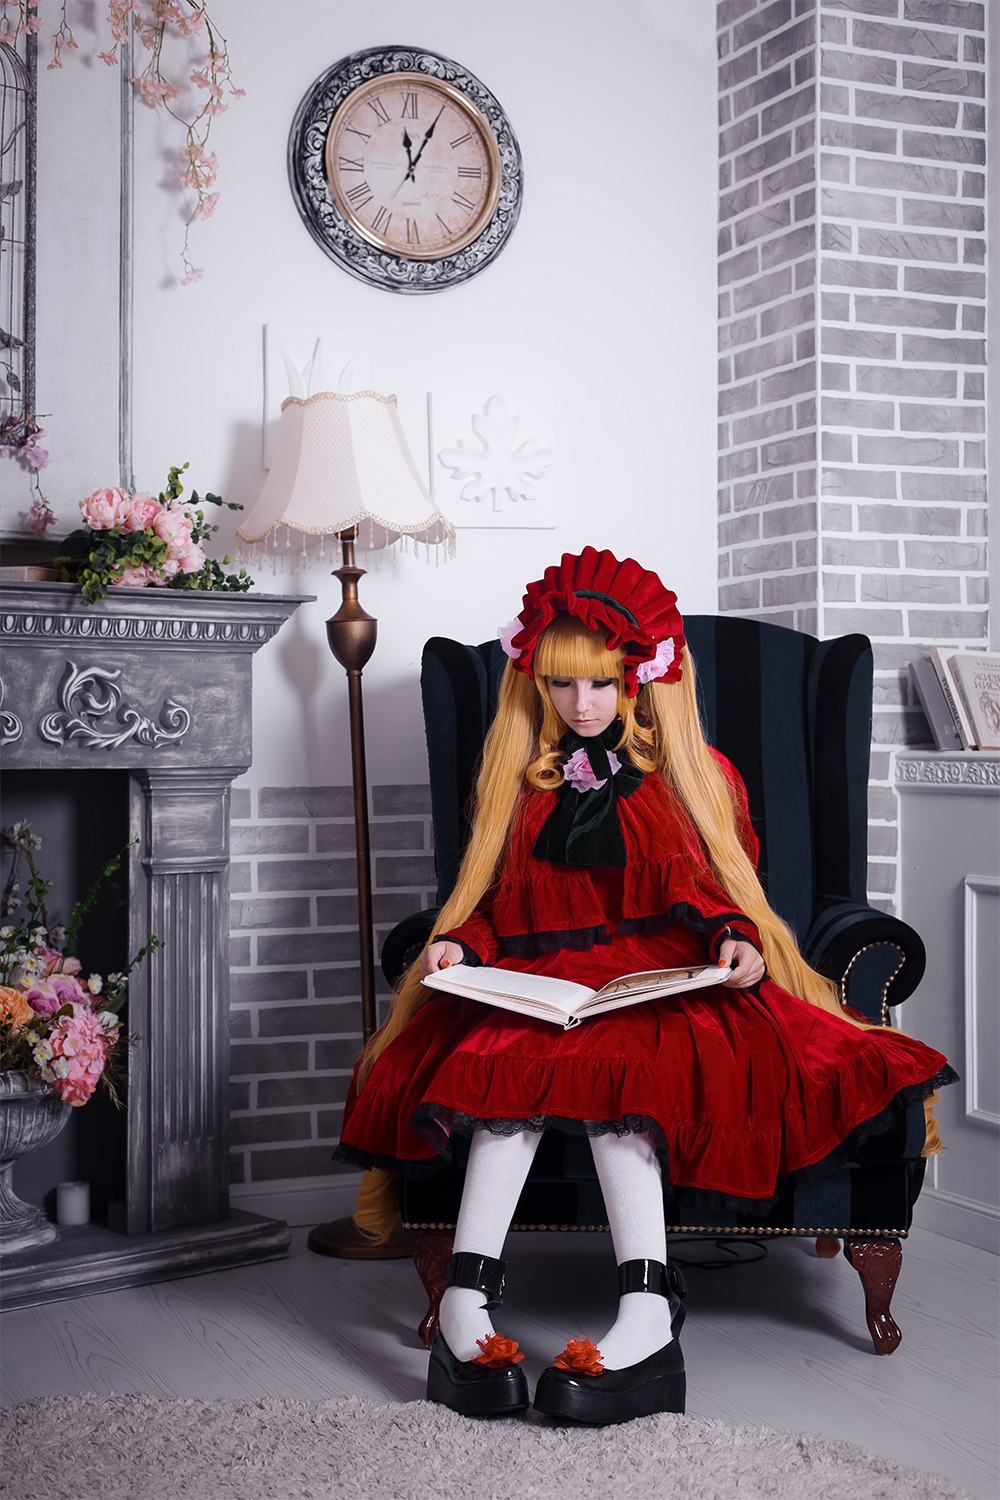 1girl blonde_hair bow dress flower long_hair pantyhose red_dress shinku shoes sitting solo very_long_hair